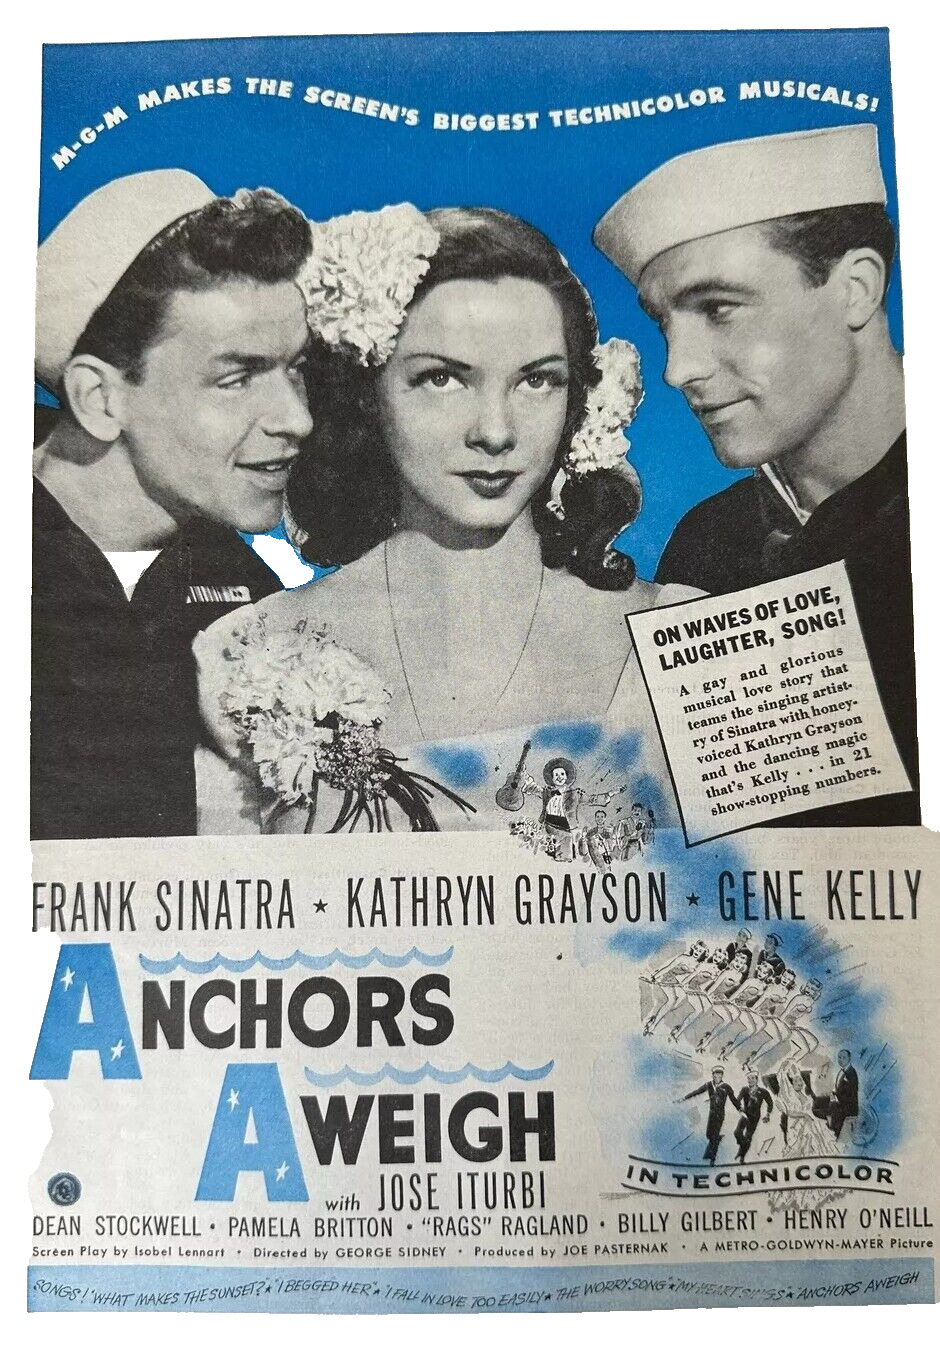 Original Vintage 1940s “Anchors Away” Film Print Ad - Frank Sinatra - Gene Kelly